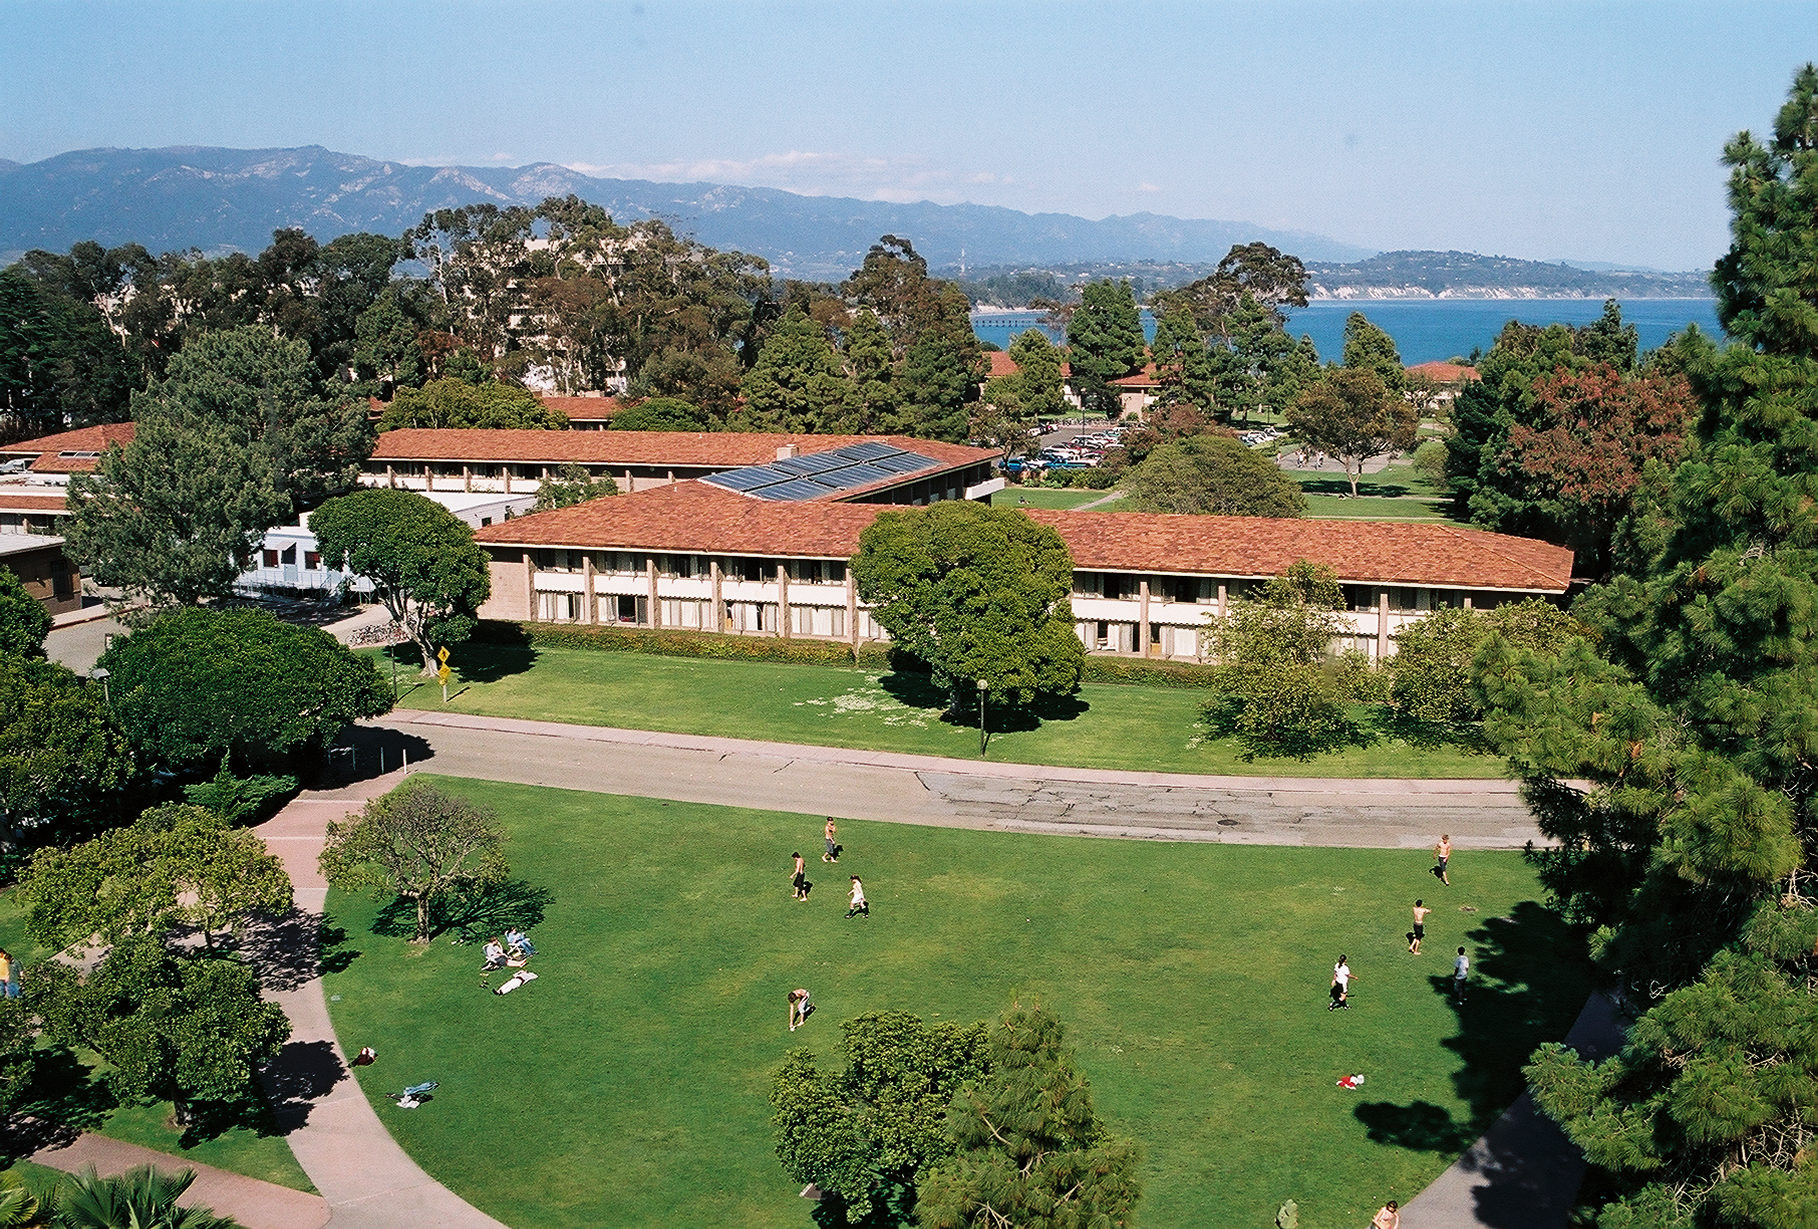 Santa Rosa Residence Hall